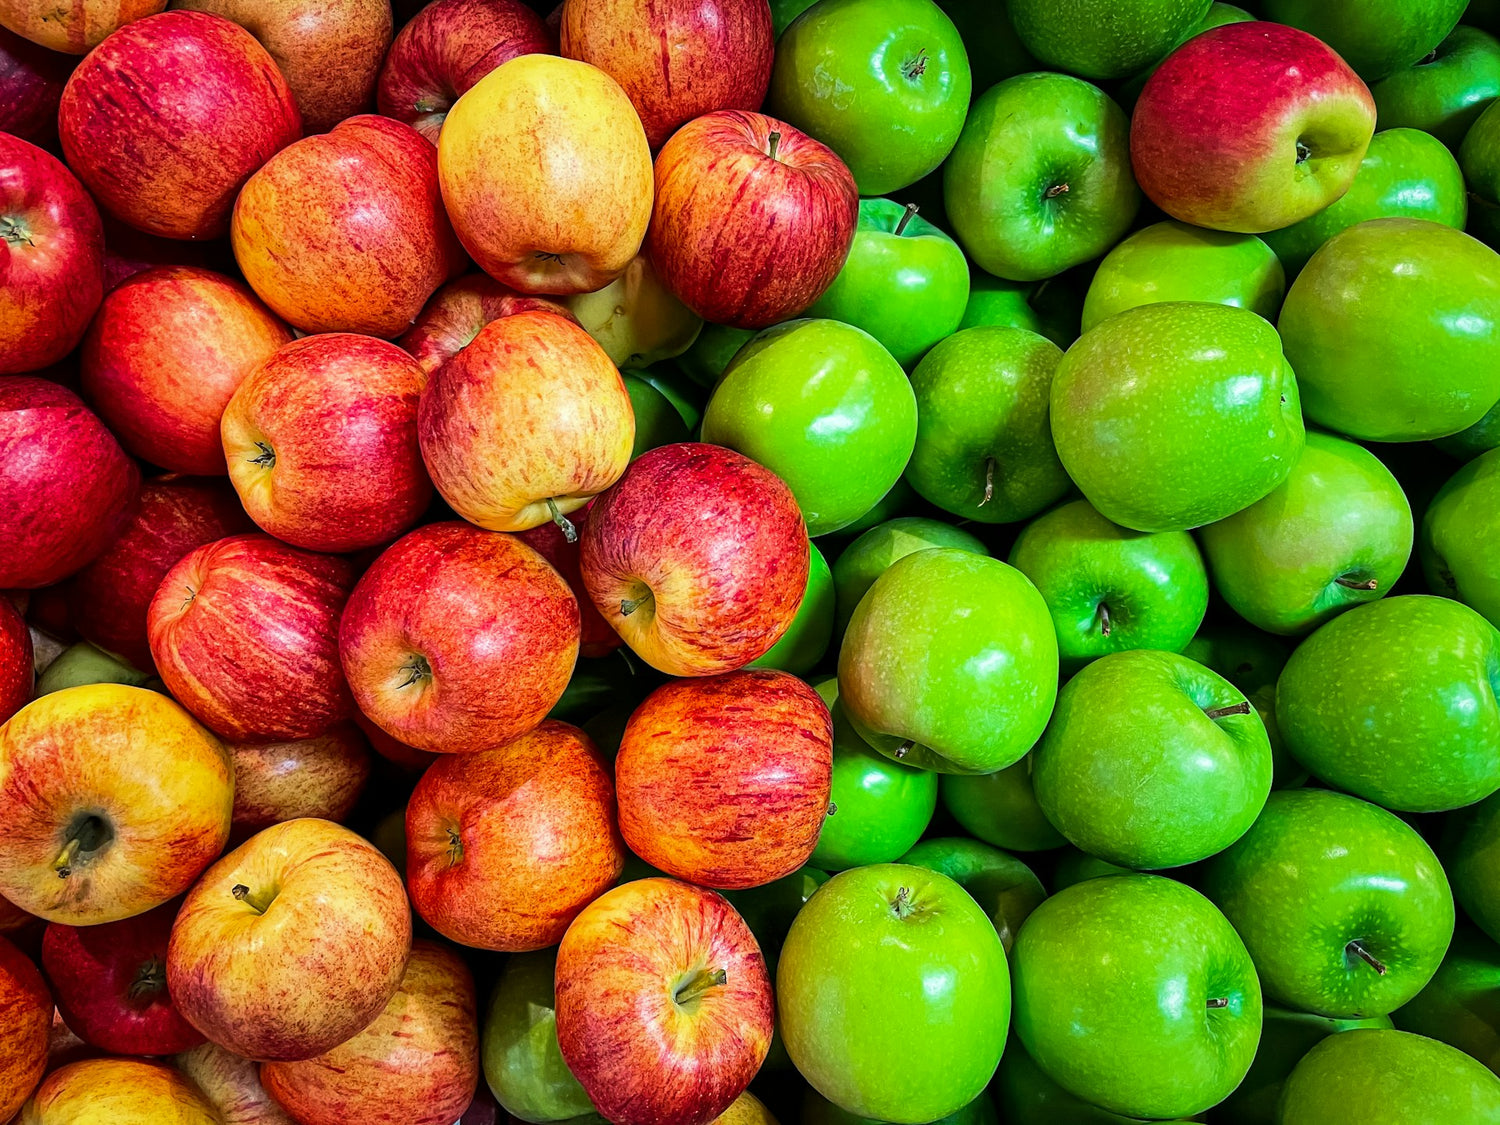 Backyard Bounty: Apples